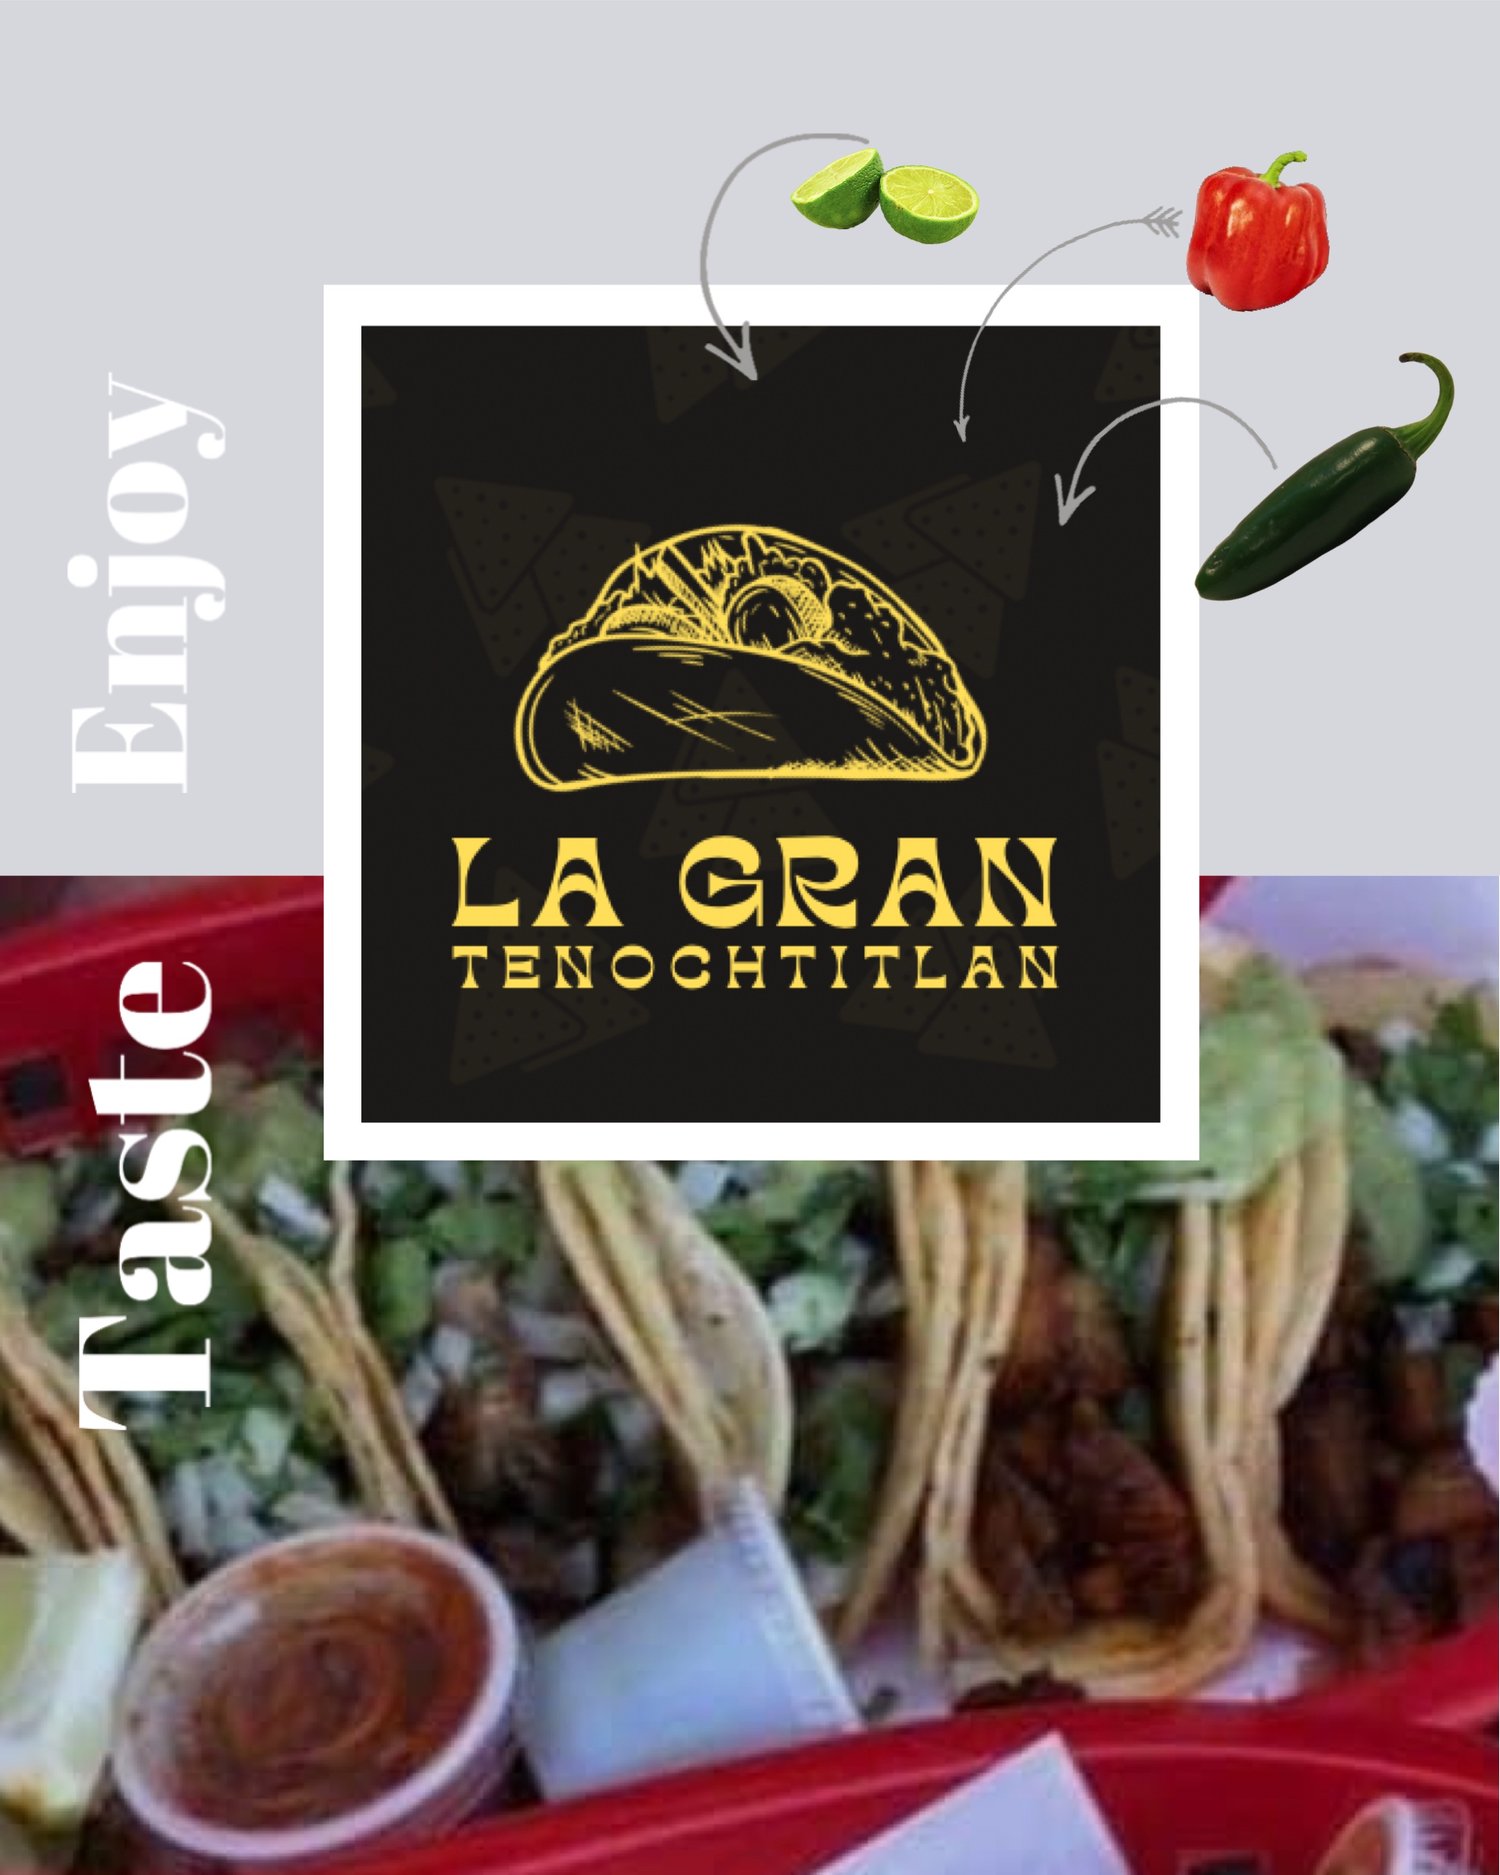 La Gran Tenochtitlan Food Truck — 3 Hundred Days of Shine